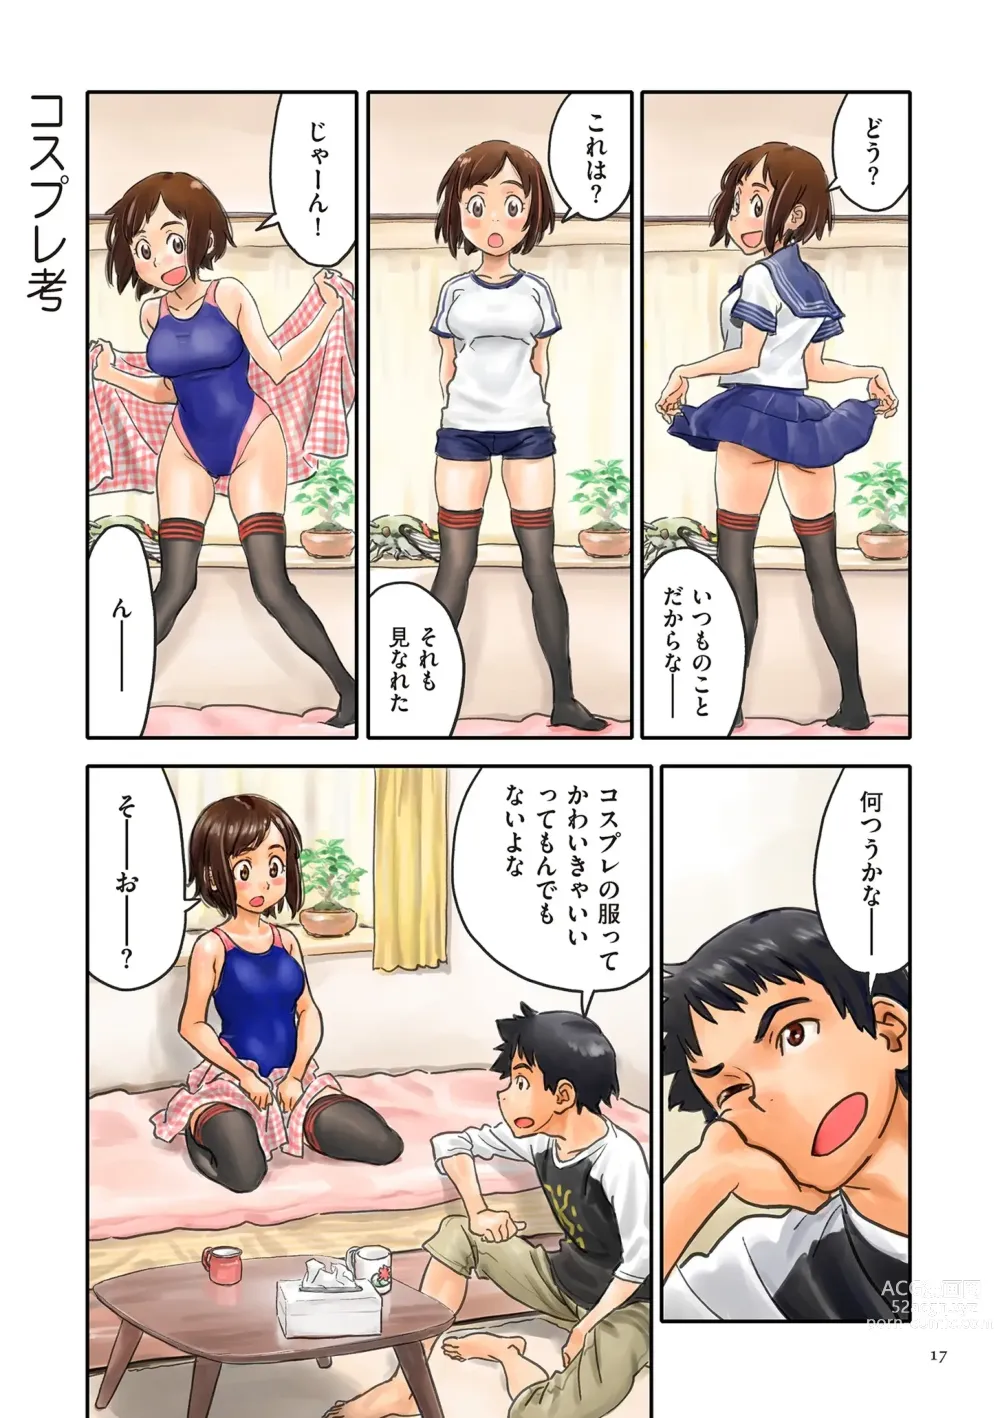 Page 17 of manga Fujicolor